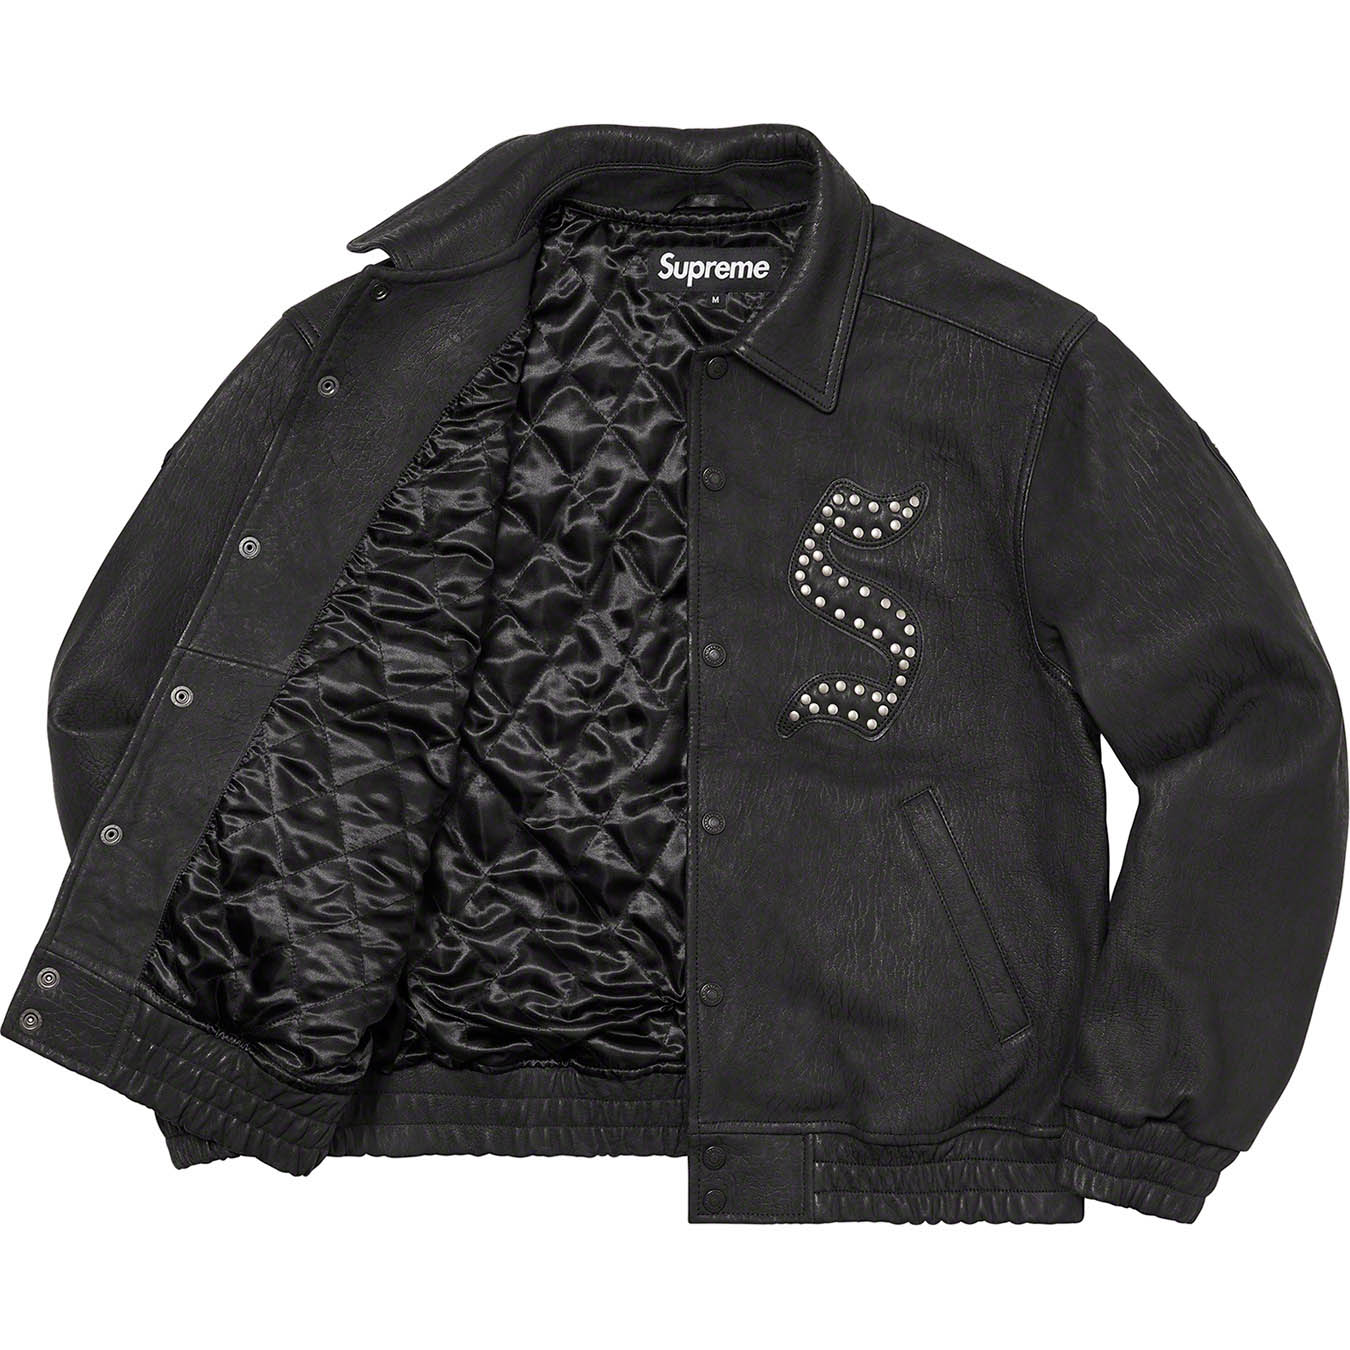 Supreme Pebbled Leather Varsity Jacket